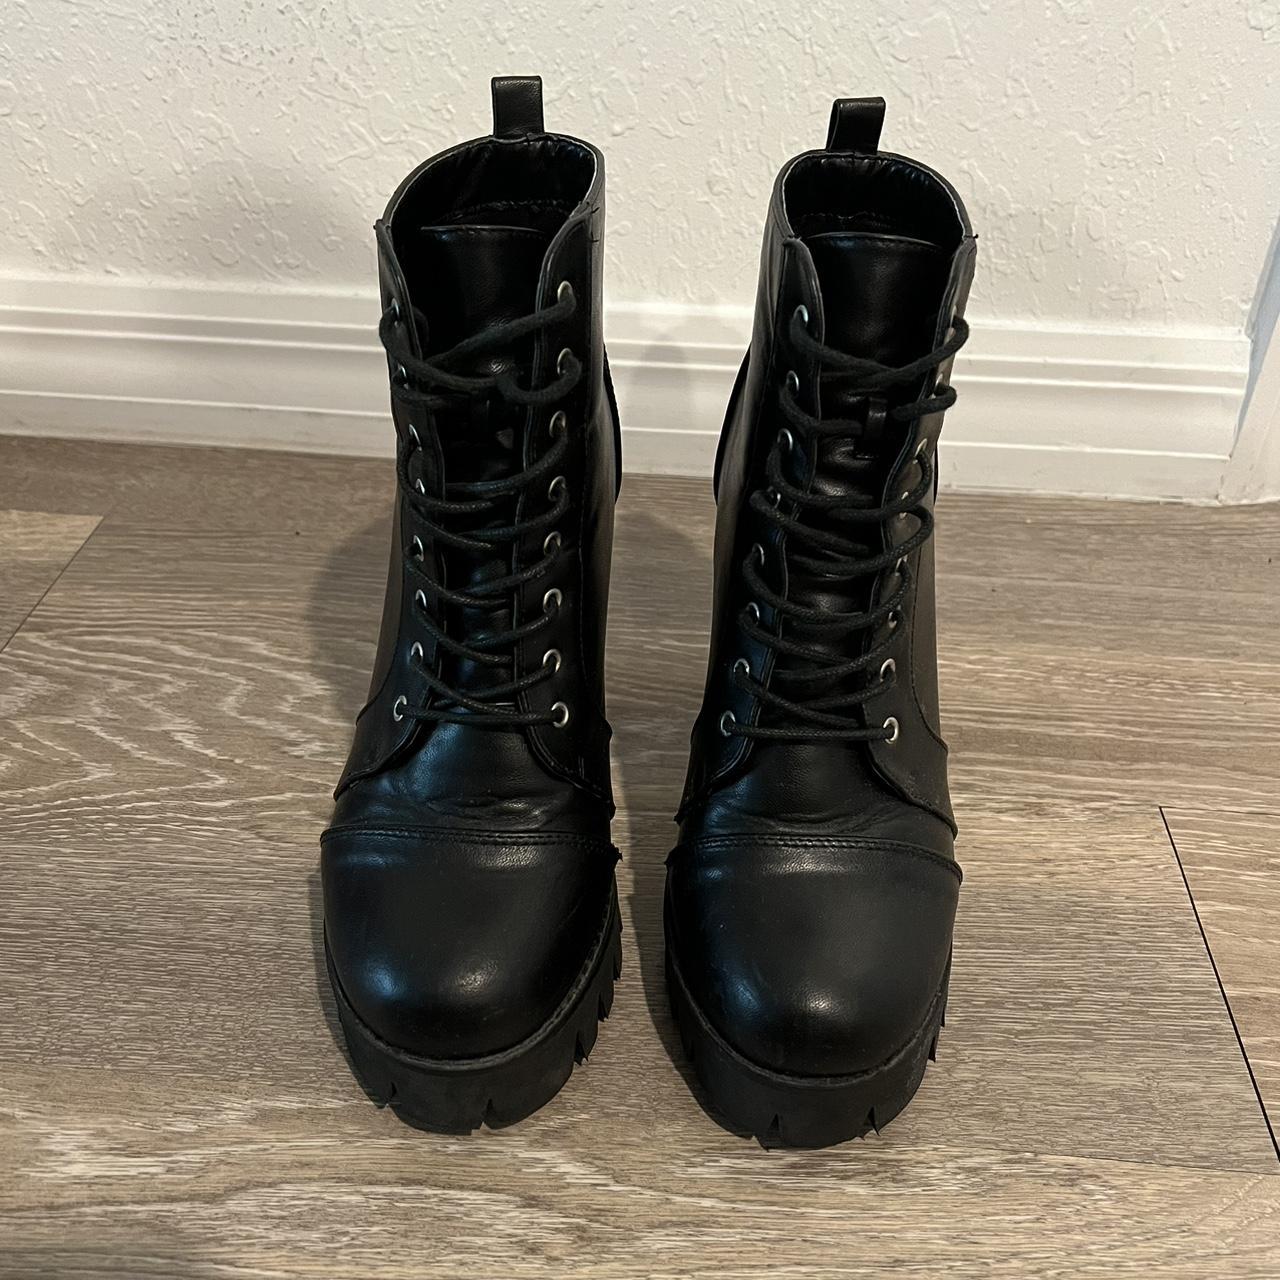 Black leather combat boots Lightly worn, slight... - Depop